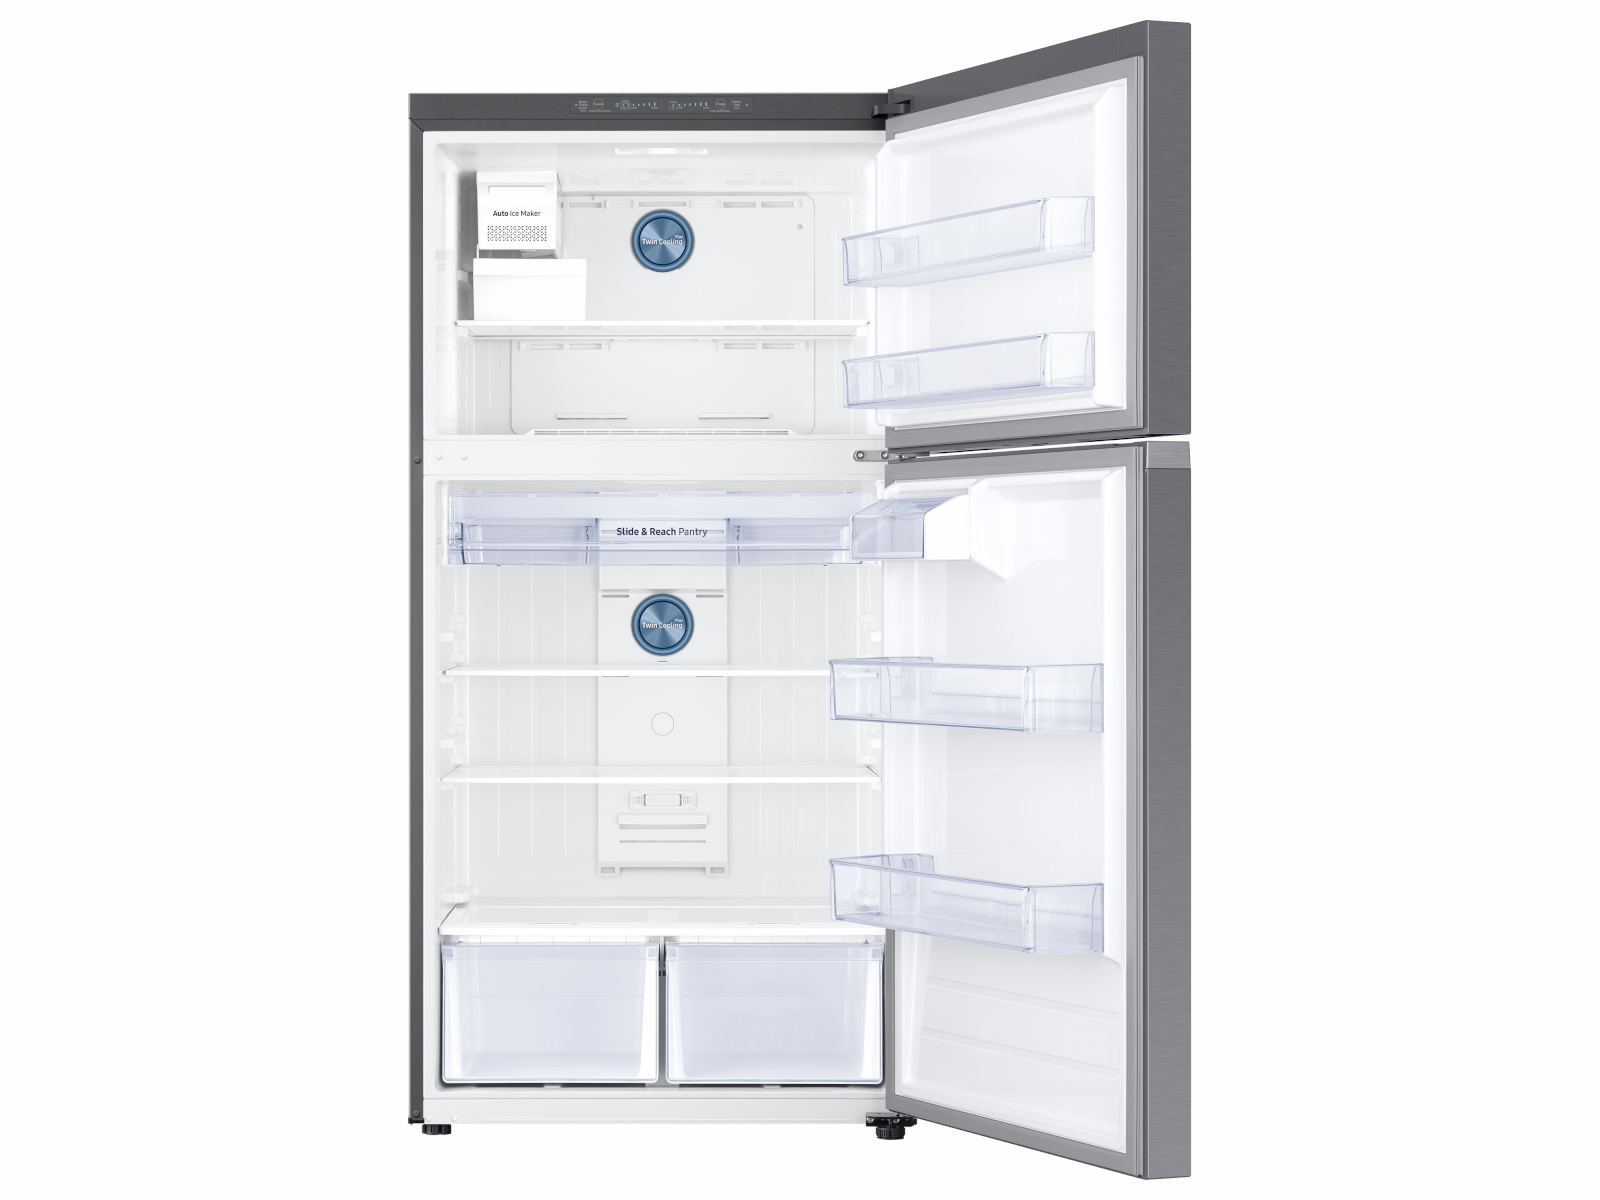 https://image-us.samsung.com/SamsungUS/home/home-appliances/refrigerators/top-mount/rt21m6215sr-aa/gallery/20171025/04_Refrigerator_Top_Freezer_RT21M6215SR_Front-Open_Empty_Silver-20171025.jpg?$product-details-jpg$